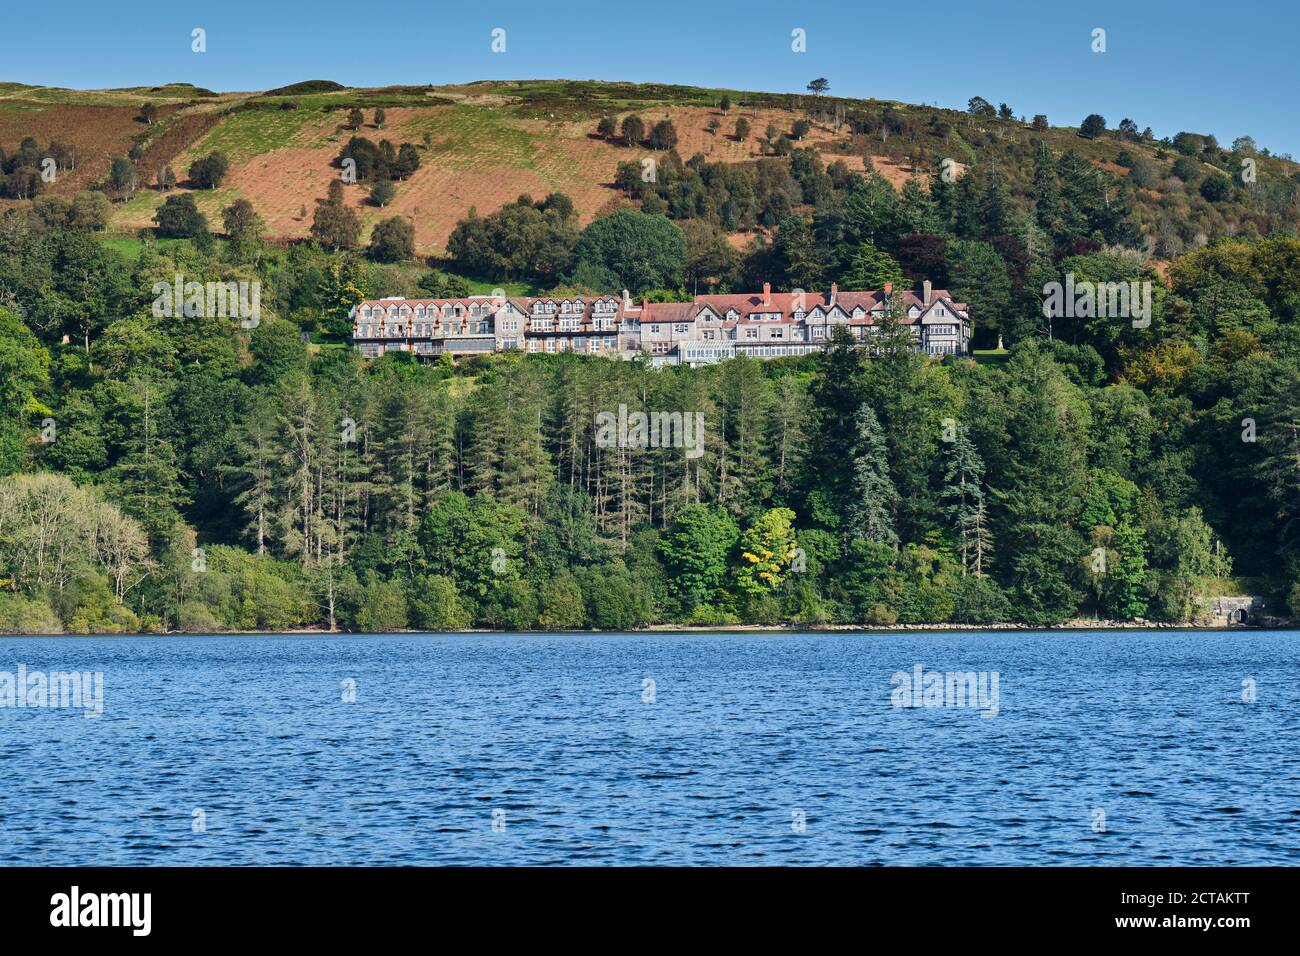 The Lake Vyrnwy Hotel at Lake Vyrnwy, Powys, Wales Stock Photo